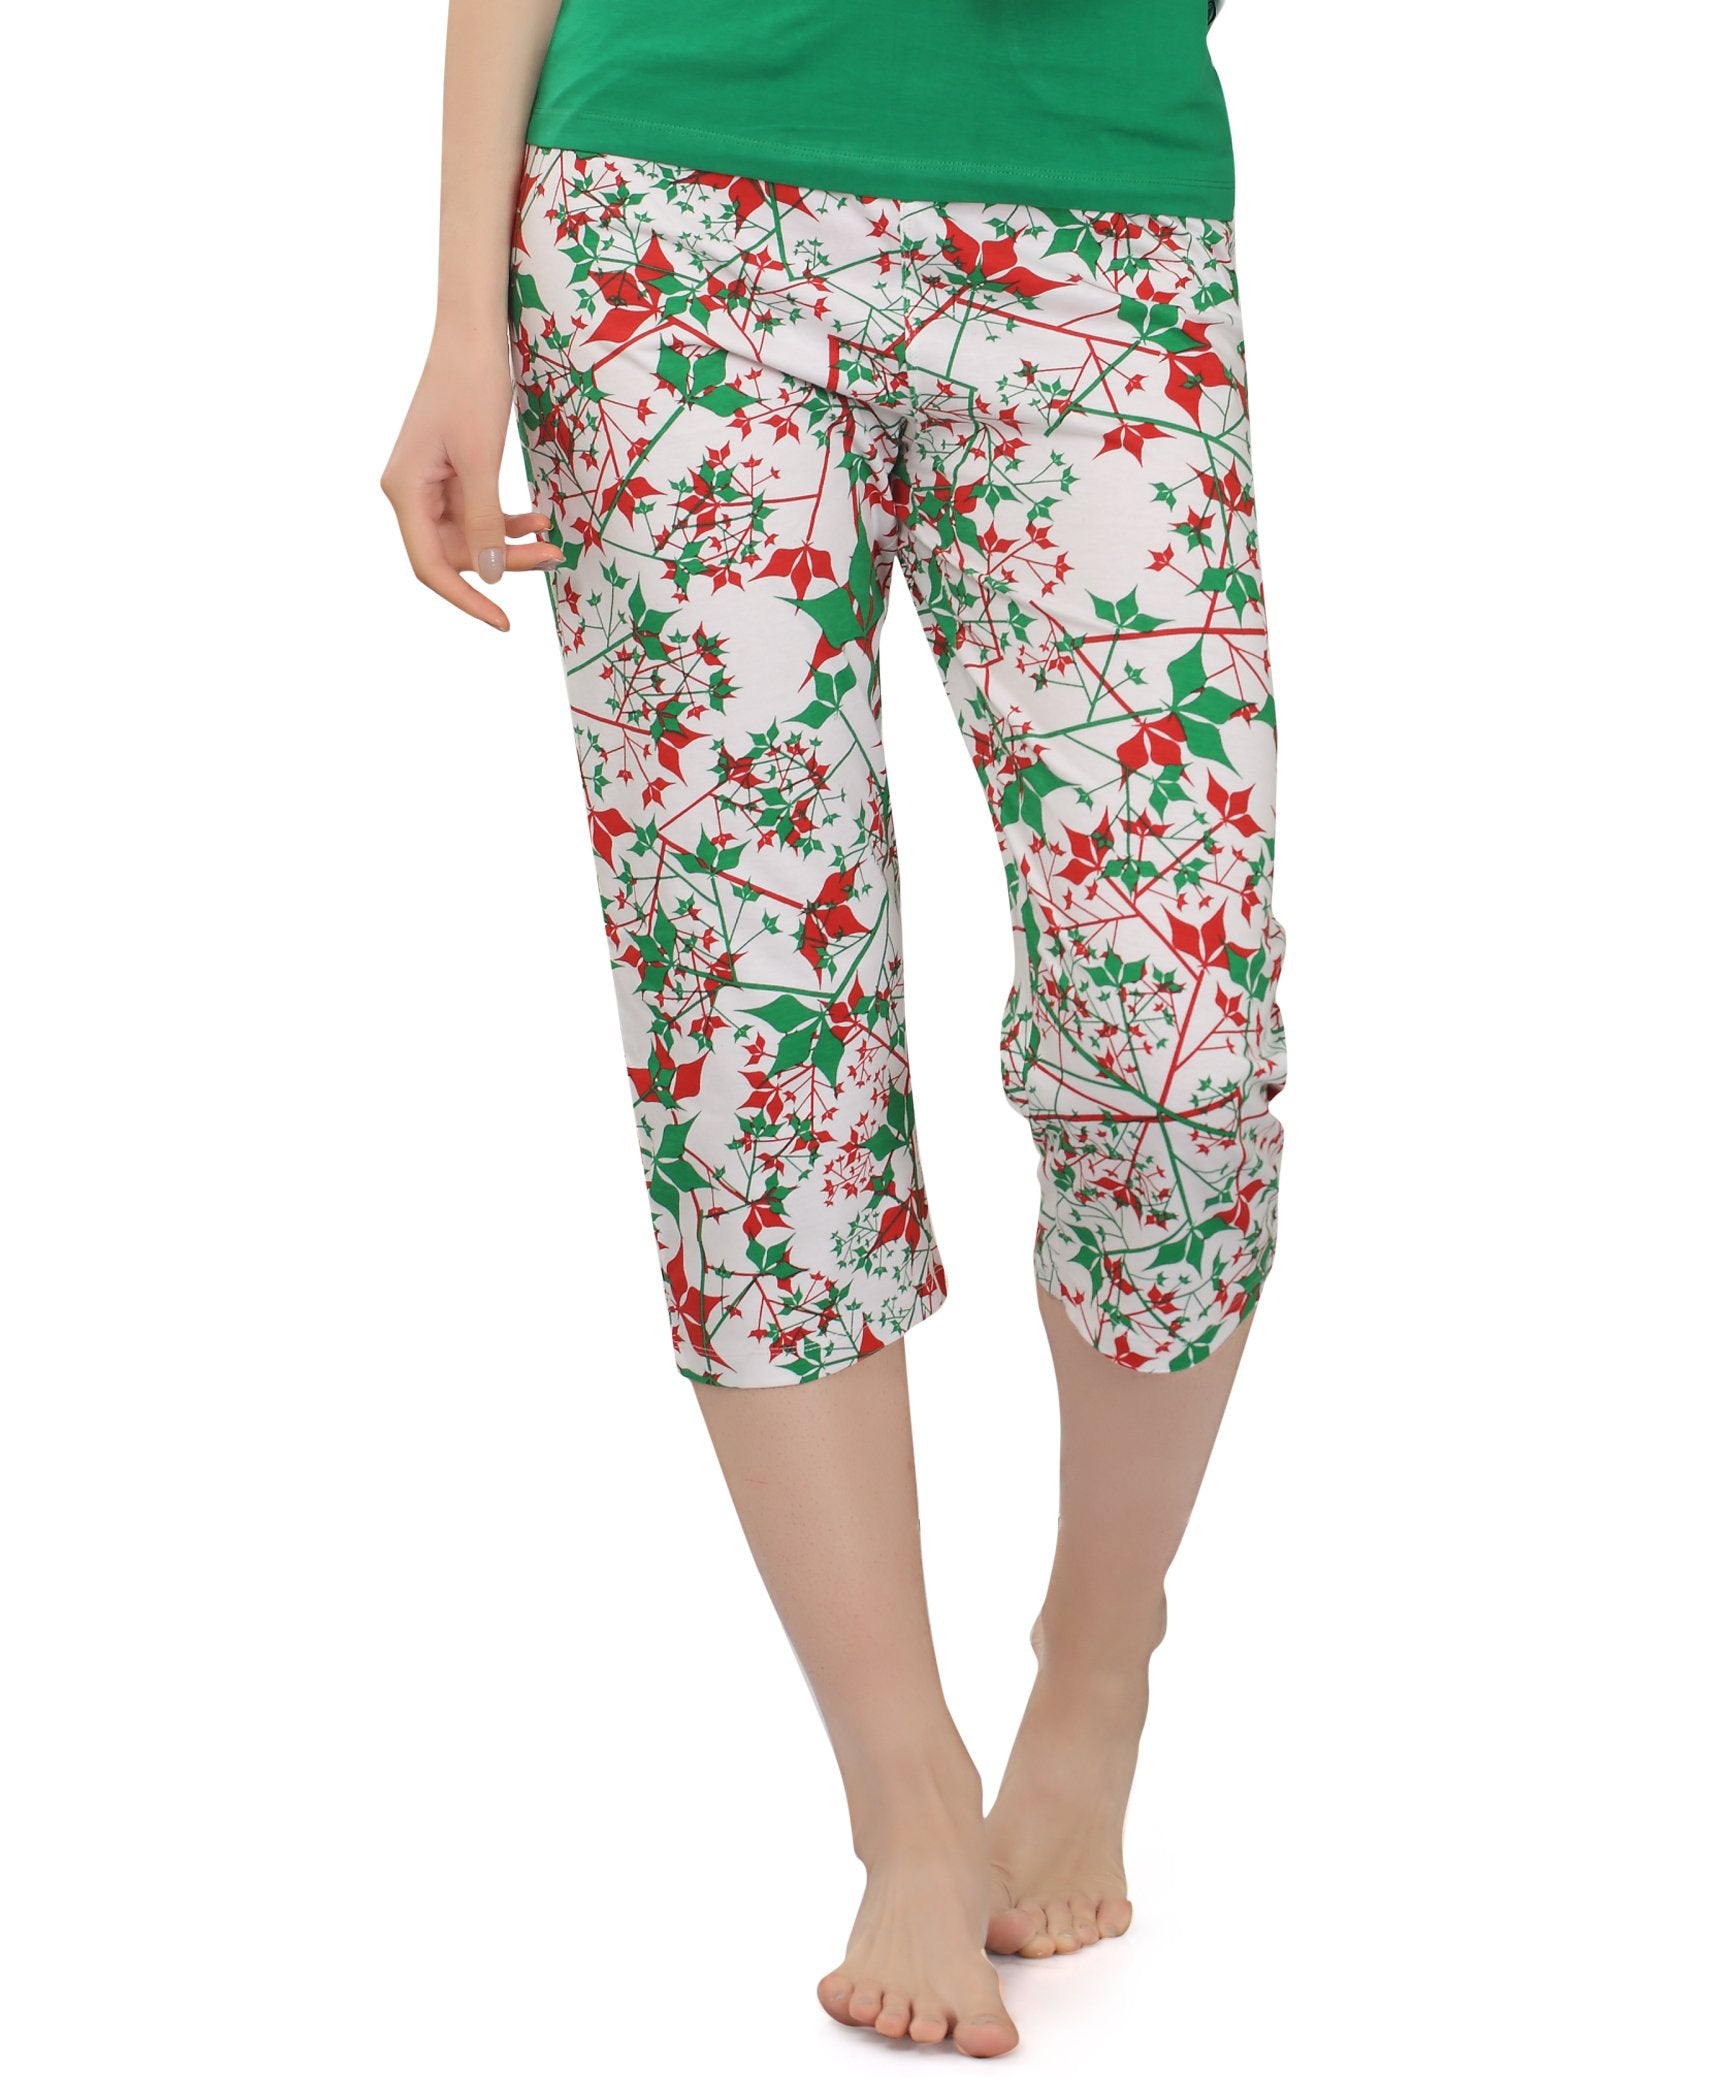 Cotton Capris For Women - Half Pants Pack Of 2 (teal Blue & Pink) at Rs  1250.00 | Ladies Cotton Capri, महिलाओं की सूती कैपरी, वूमेन कॉटन कैपरी -  Tanya Enterprises, Ludhiana | ID: 25475131591